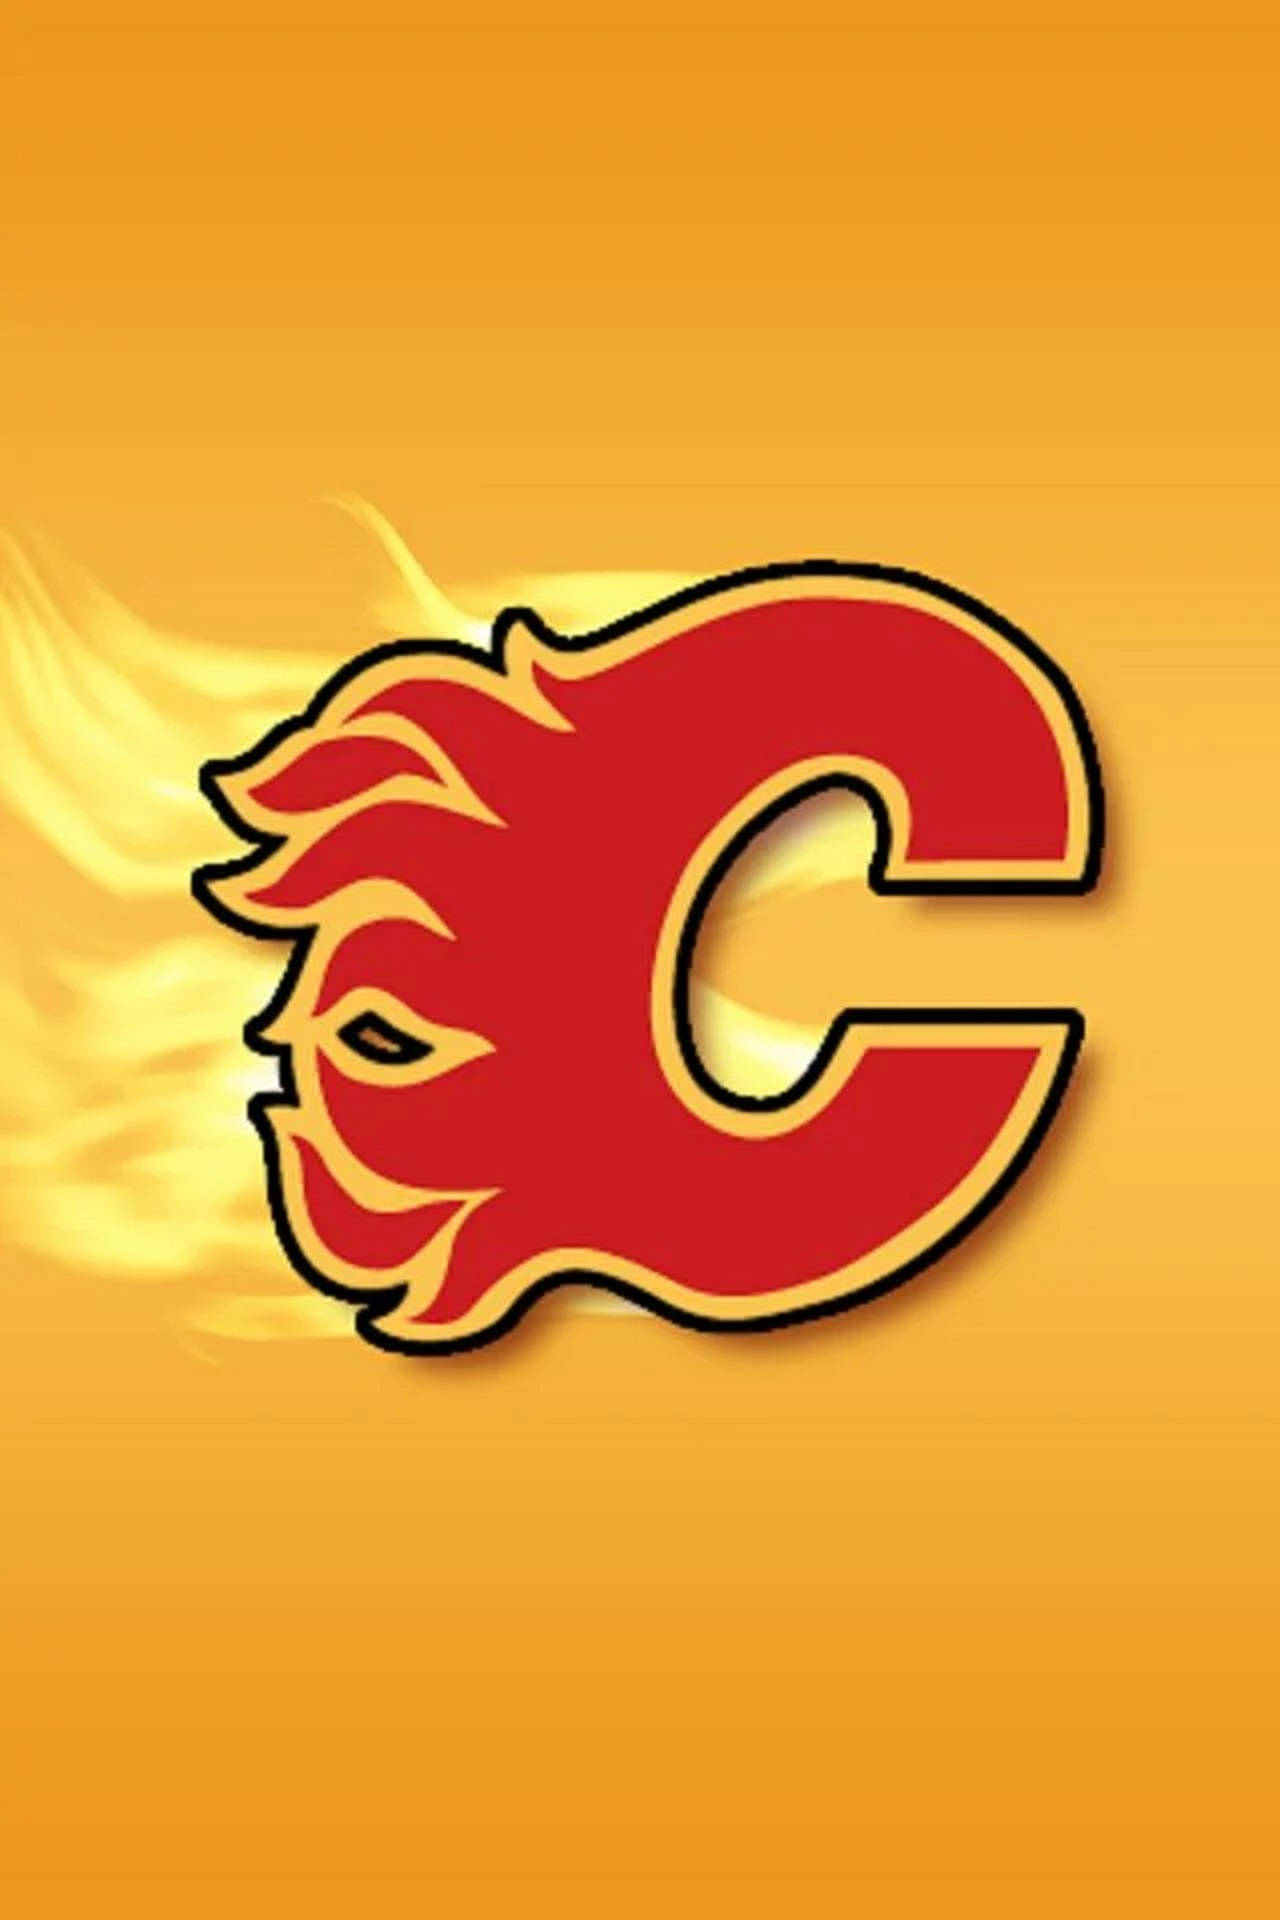 Red Calgary Flames Logo In Yellow Wallpaper